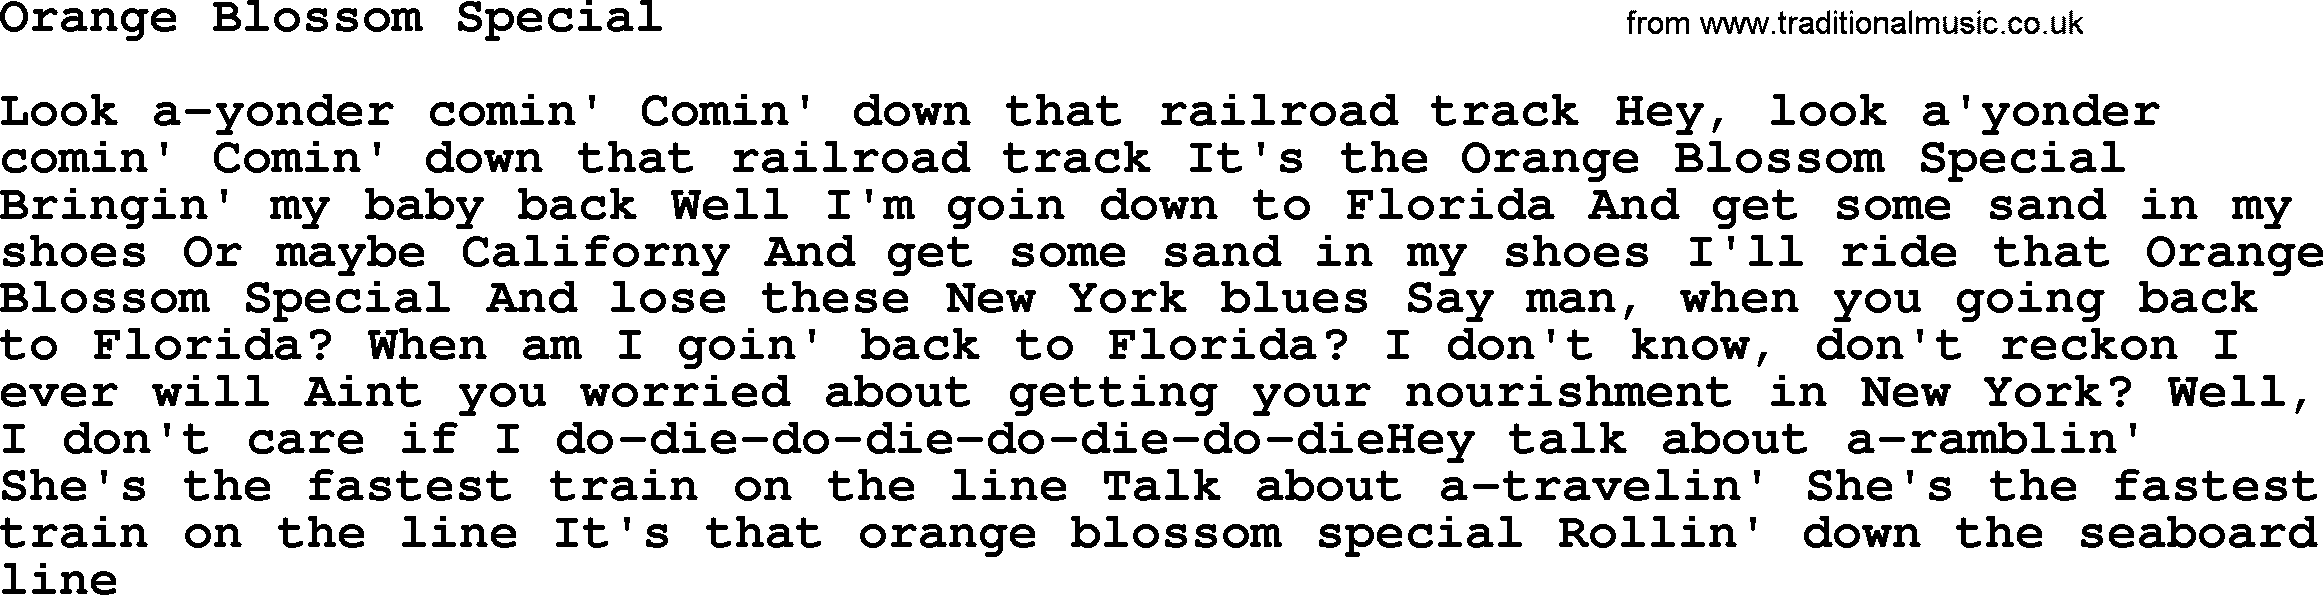 Dolly Parton song Orange Blossom Special.txt lyrics